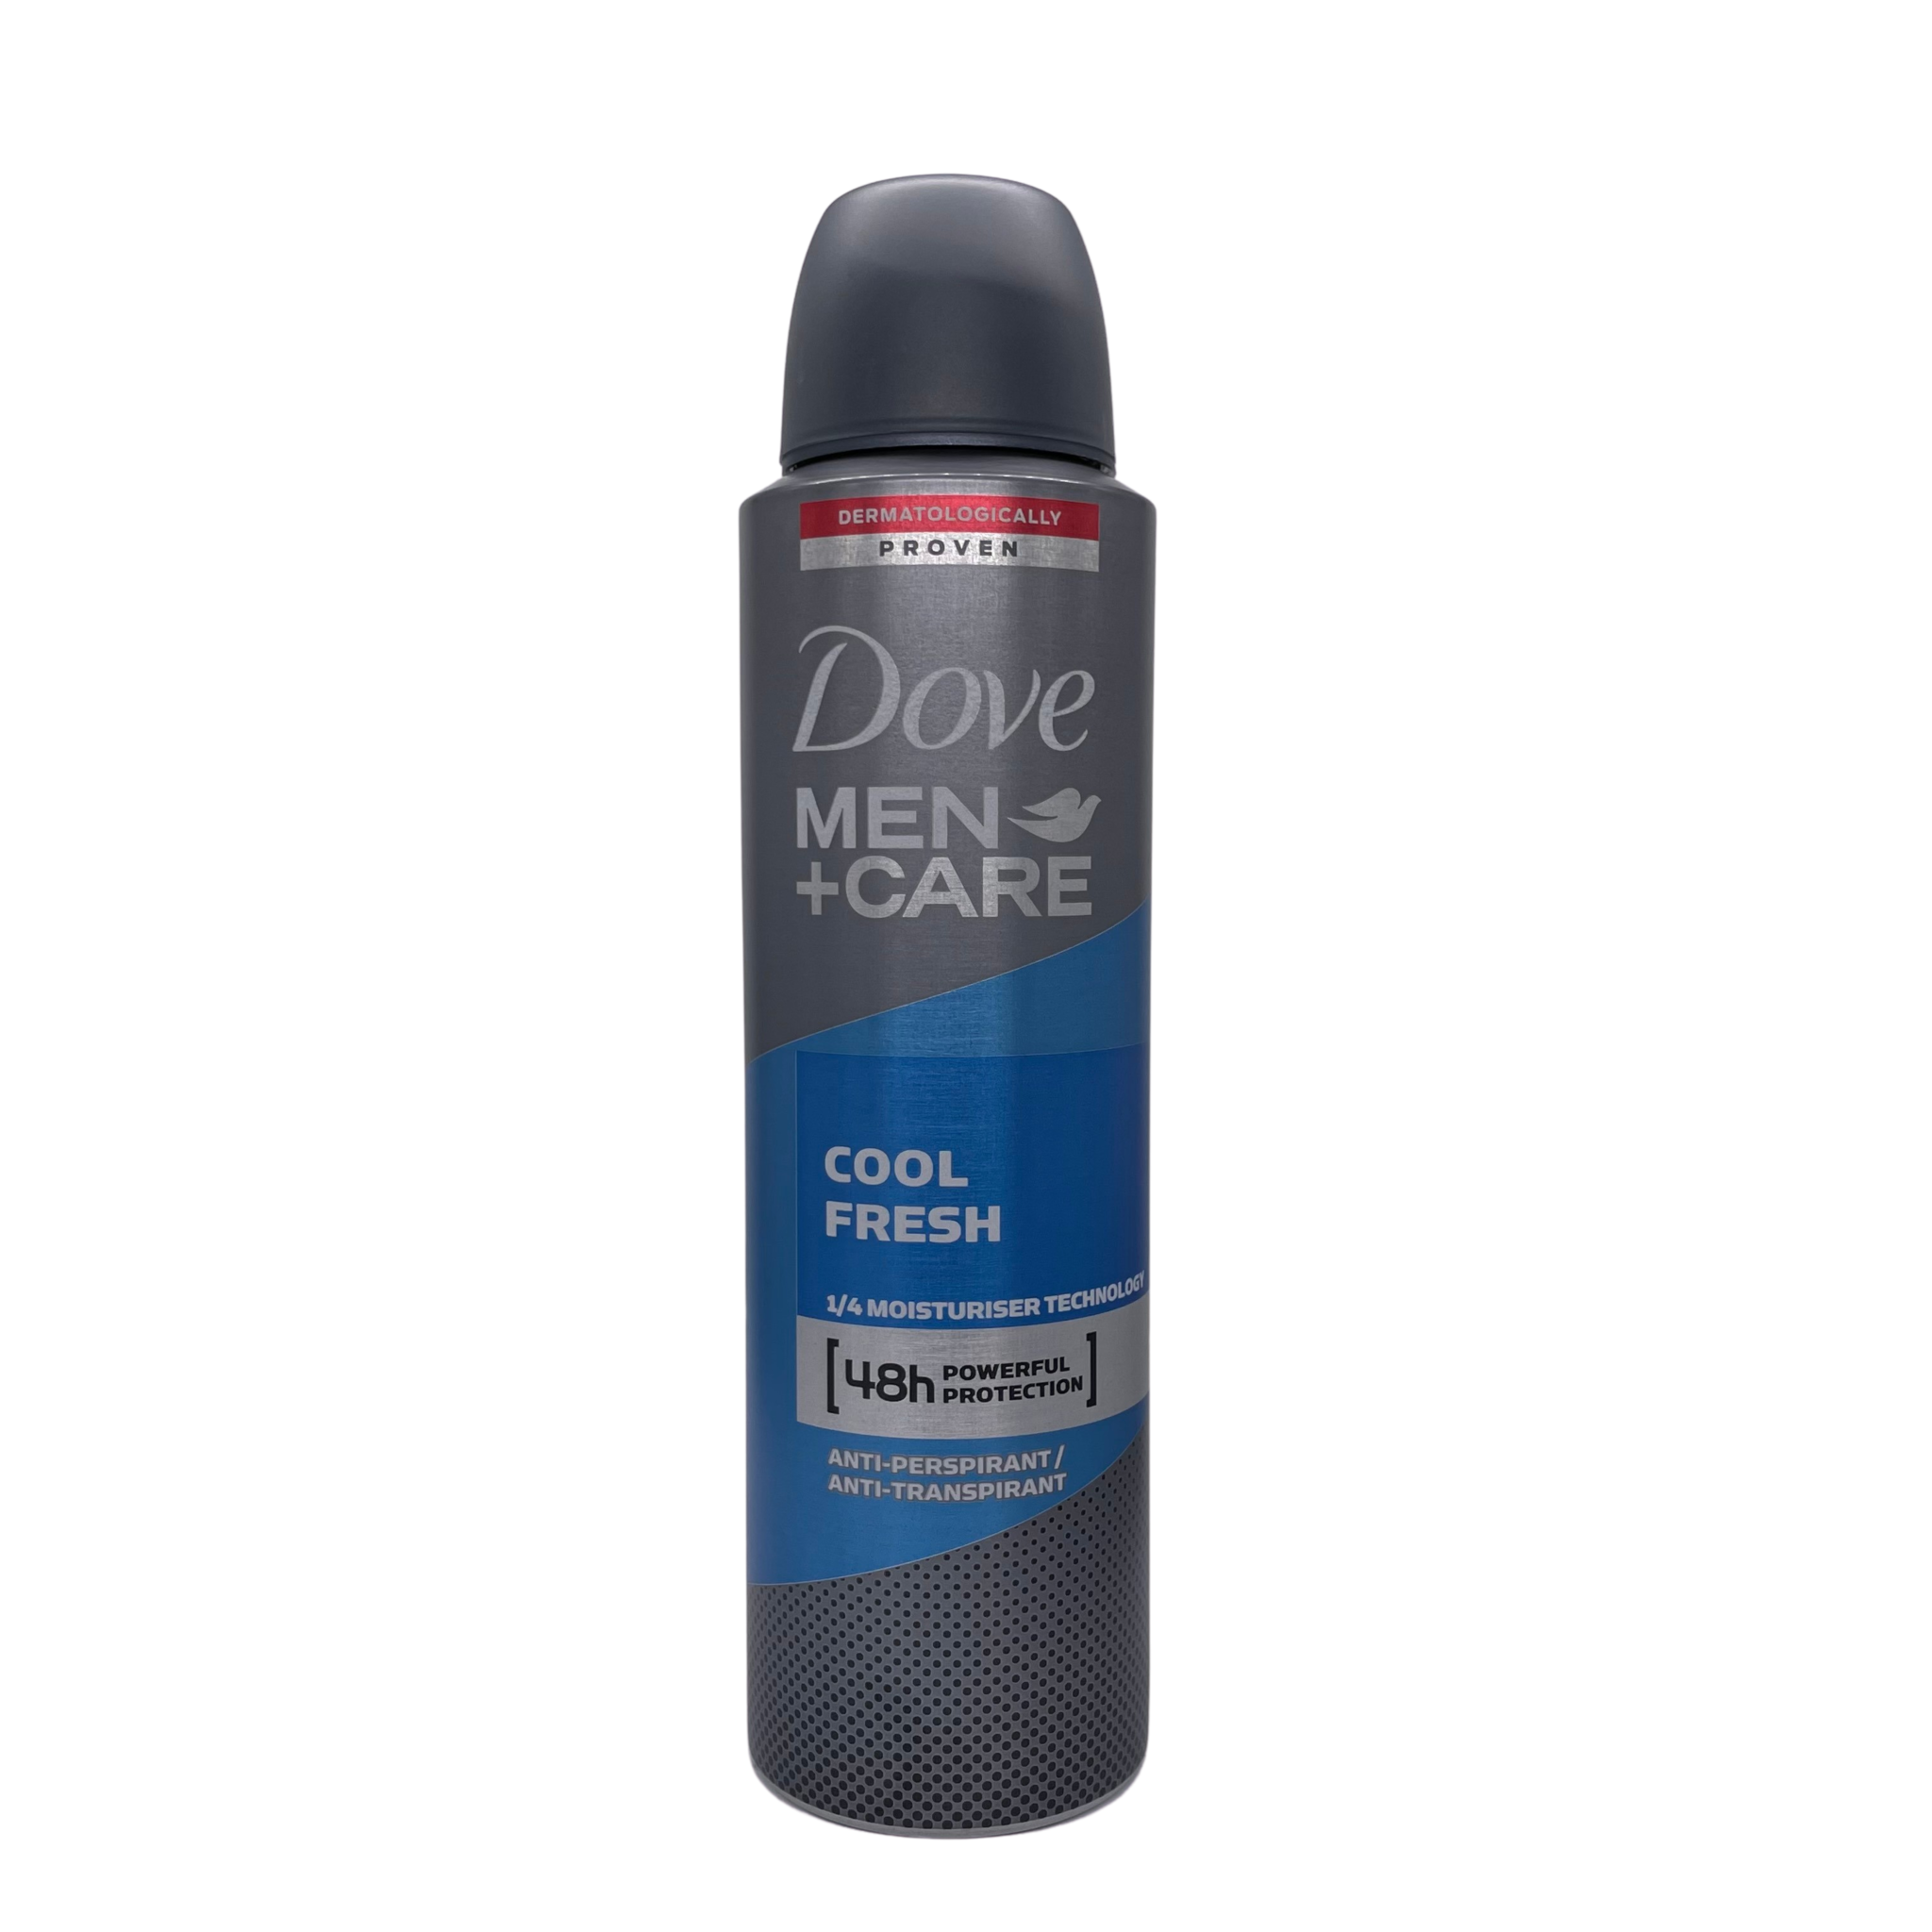 Dove Men+Care Cool Fresh deodorant spray 150ml